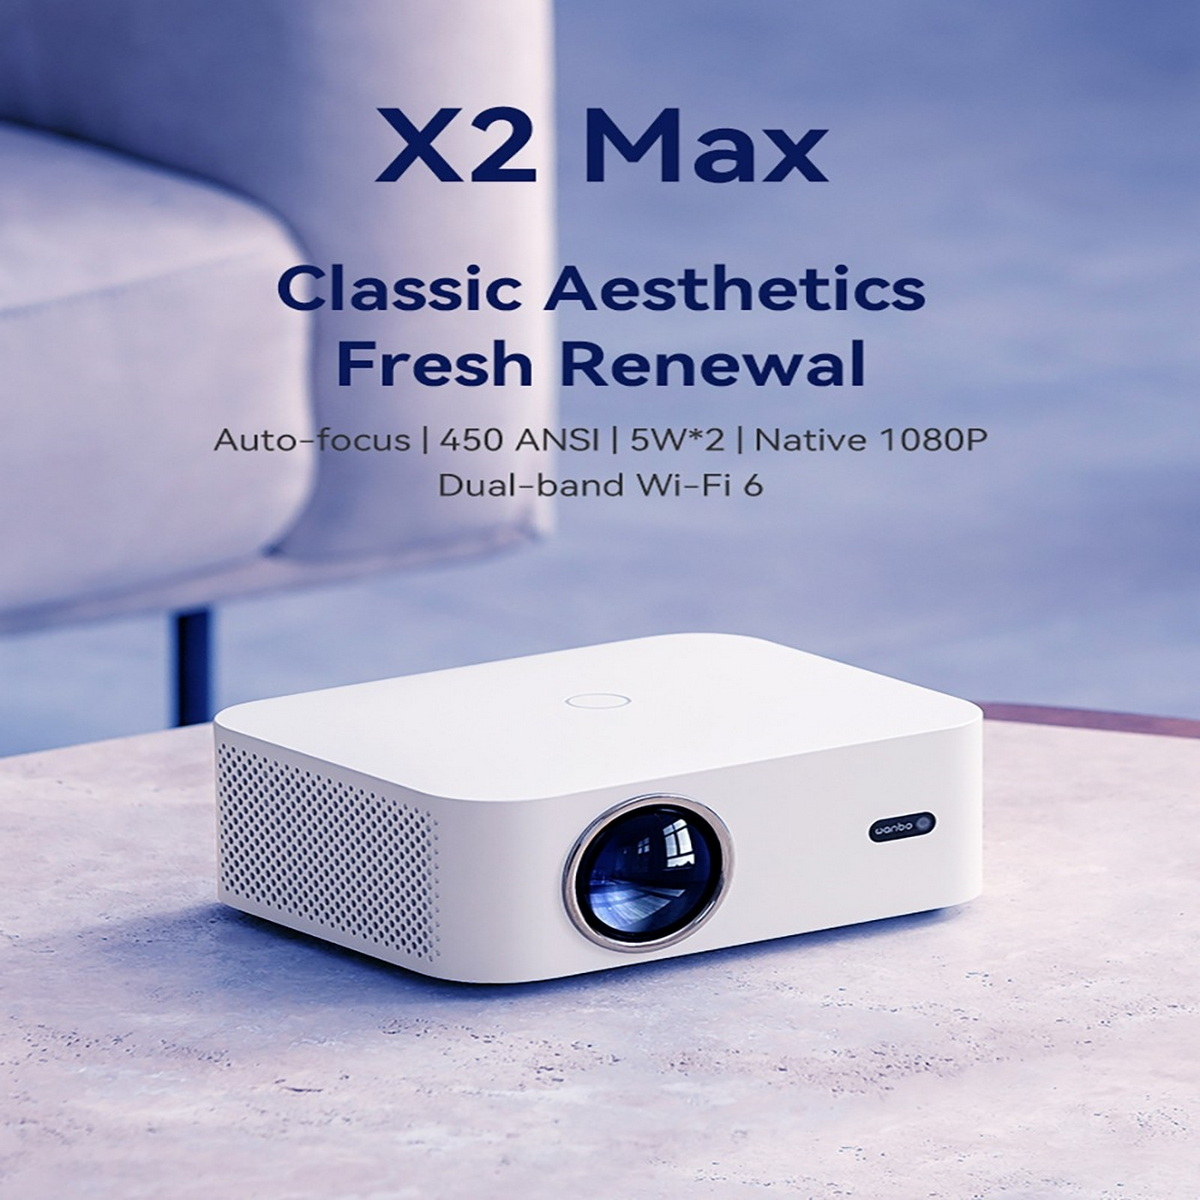 WANBO X2 Max Beamer(HD+, 450 ANSI-Lumen)